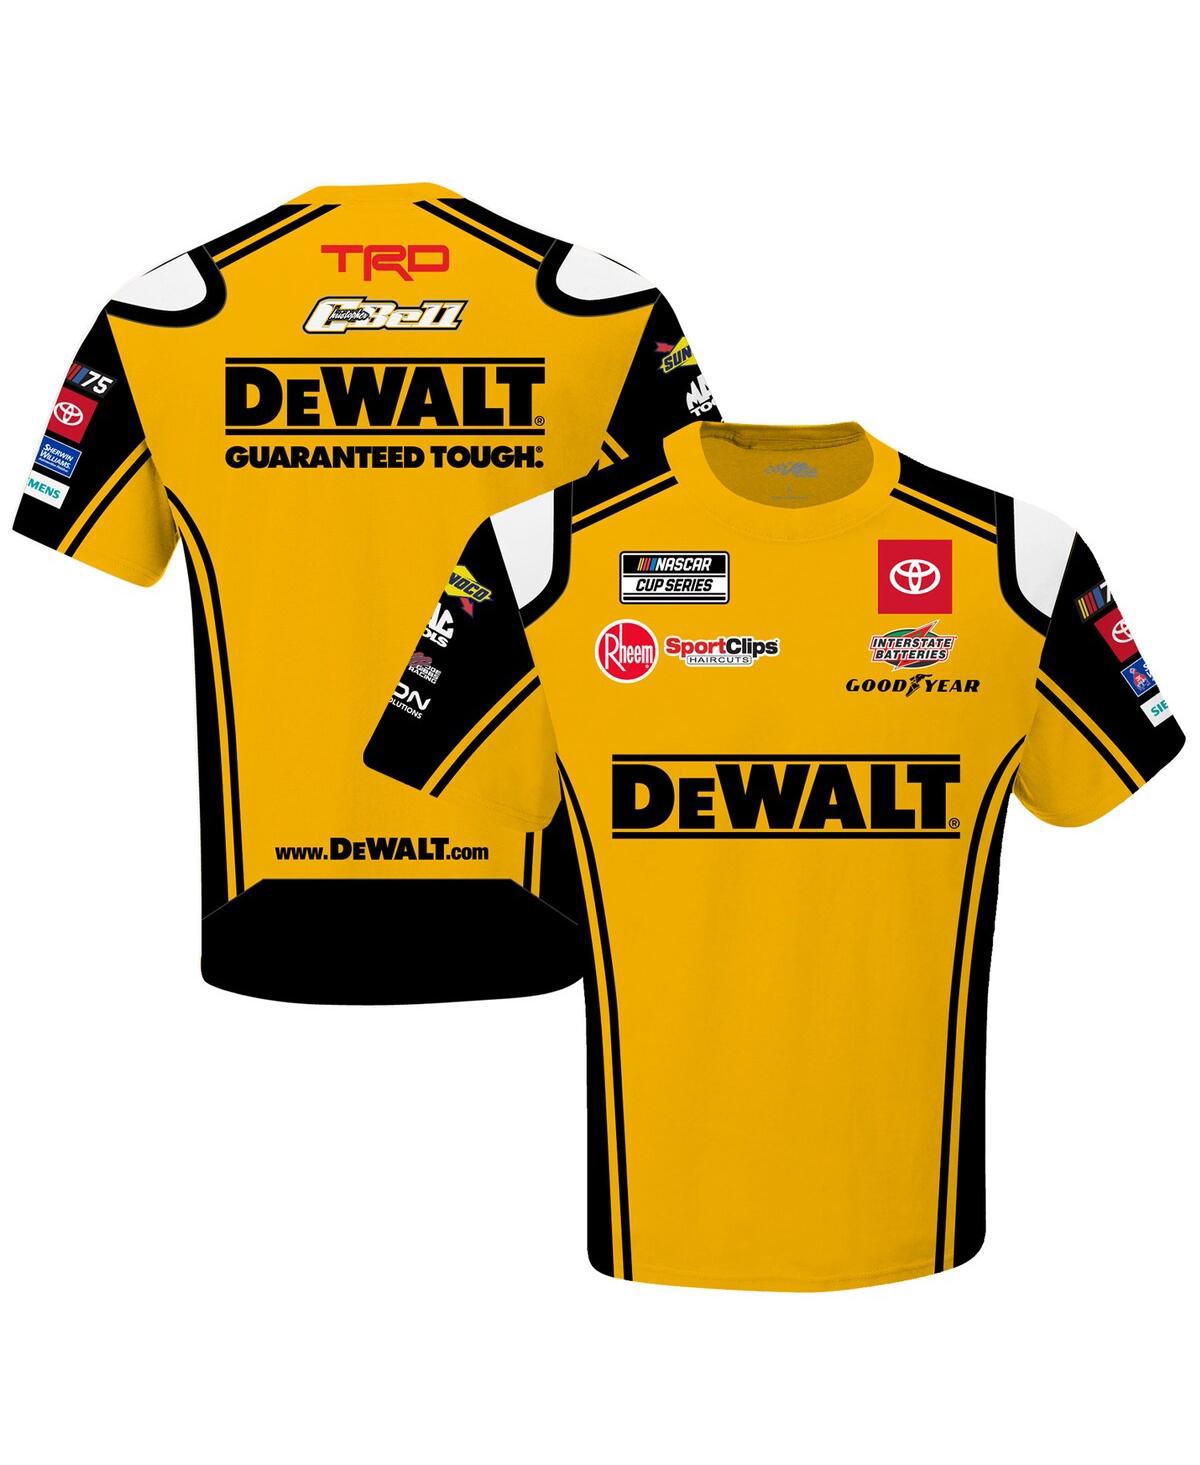 Men's Joe Gibbs Racing Team Collection Gold Christopher Bell Dewalt Sublimated Uniform T-shirt - Yellow